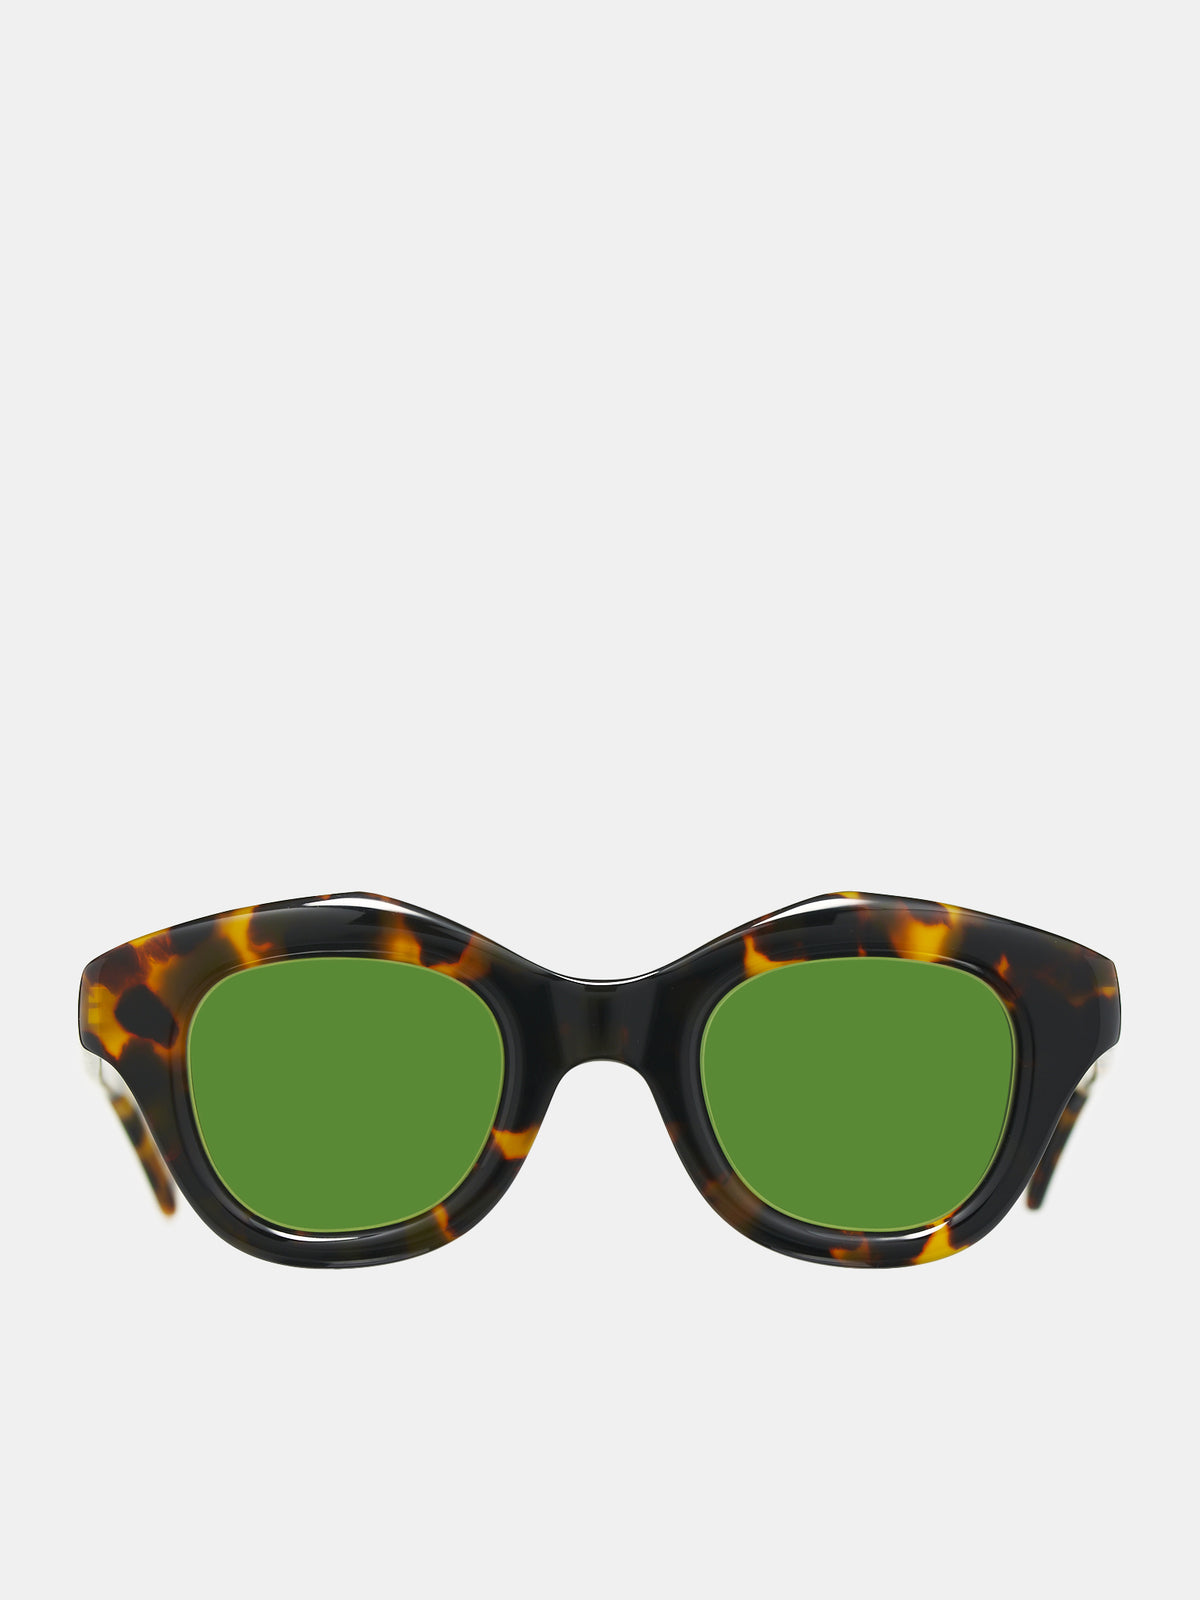 Hook Sunglasses (HOOK-YELLOW-TORTSHELL-GREEN4)